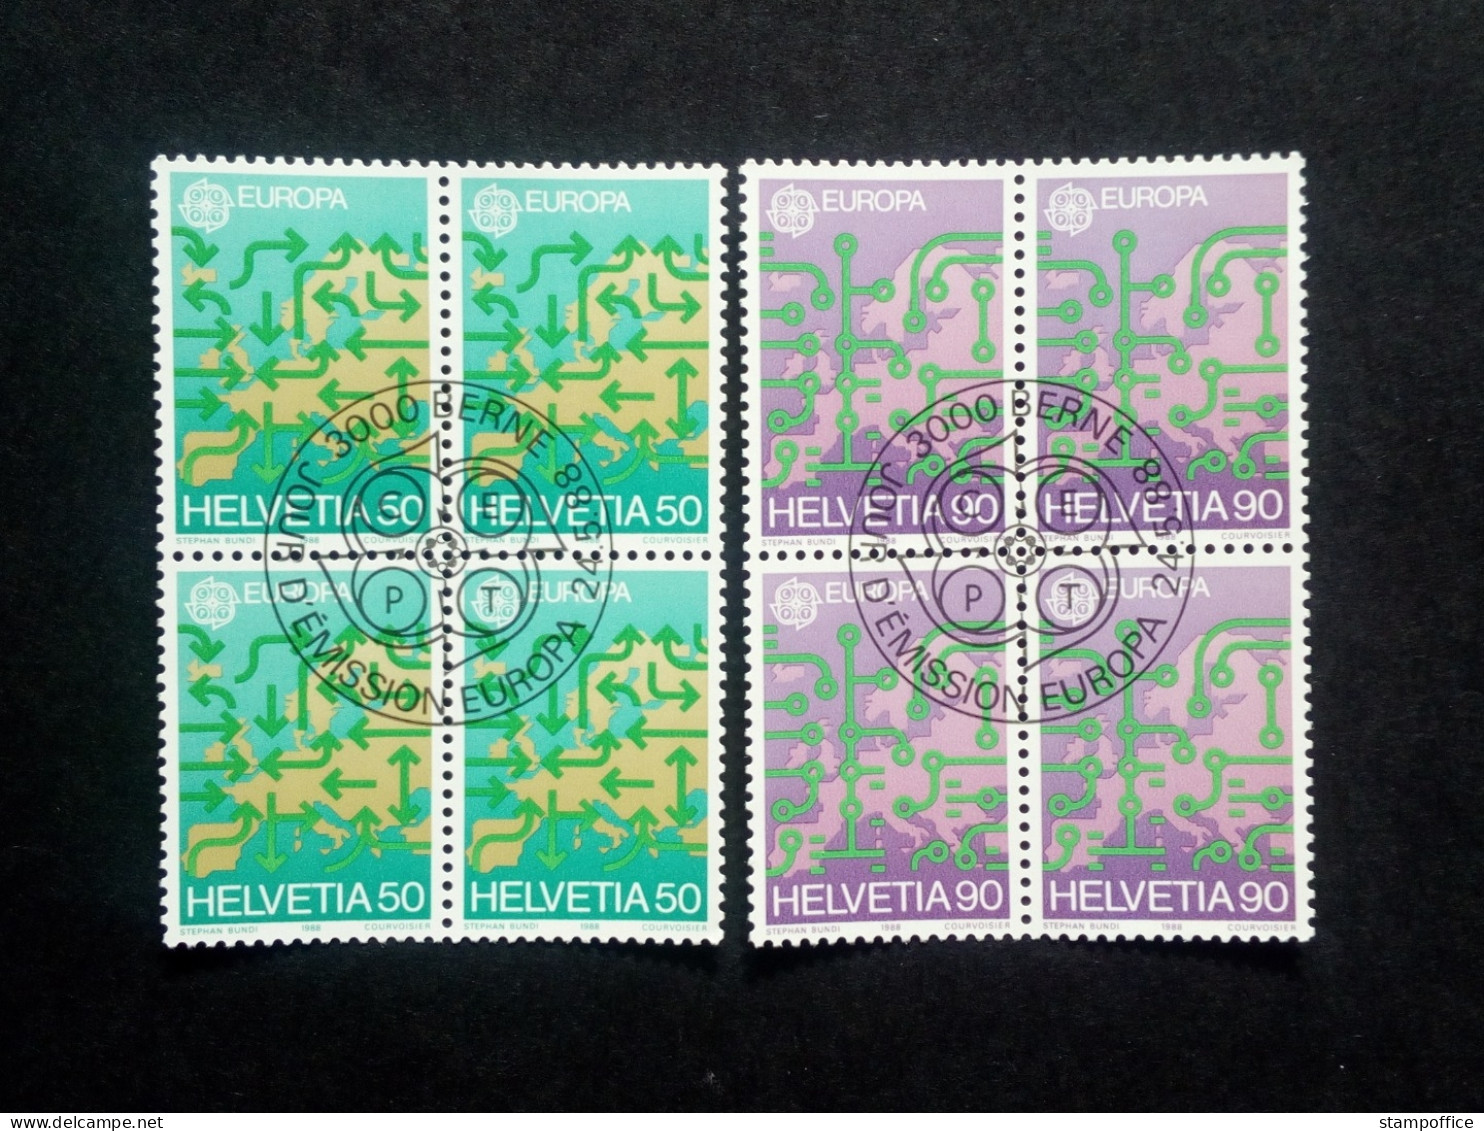 SCHWEIZ MI-NR. 1370-1371 GESTEMPELT(USED) EUROPA 1988 4er BLOCK TRANSPORTMITTEL LANDKARTE - Used Stamps